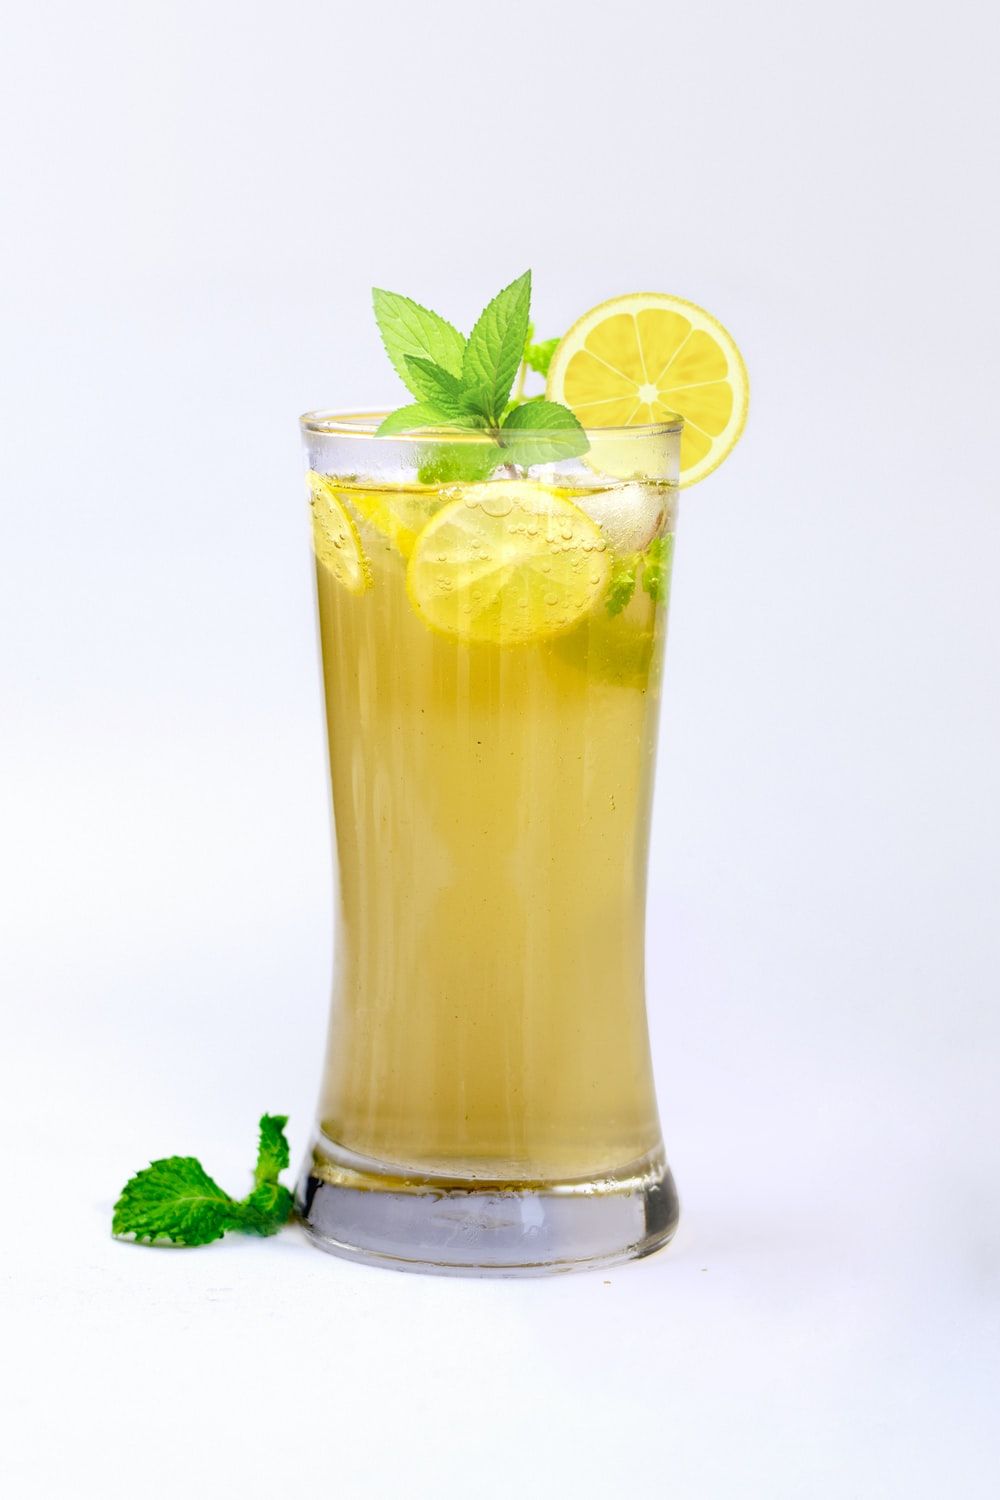 Lemonade Picture. Download Free Image